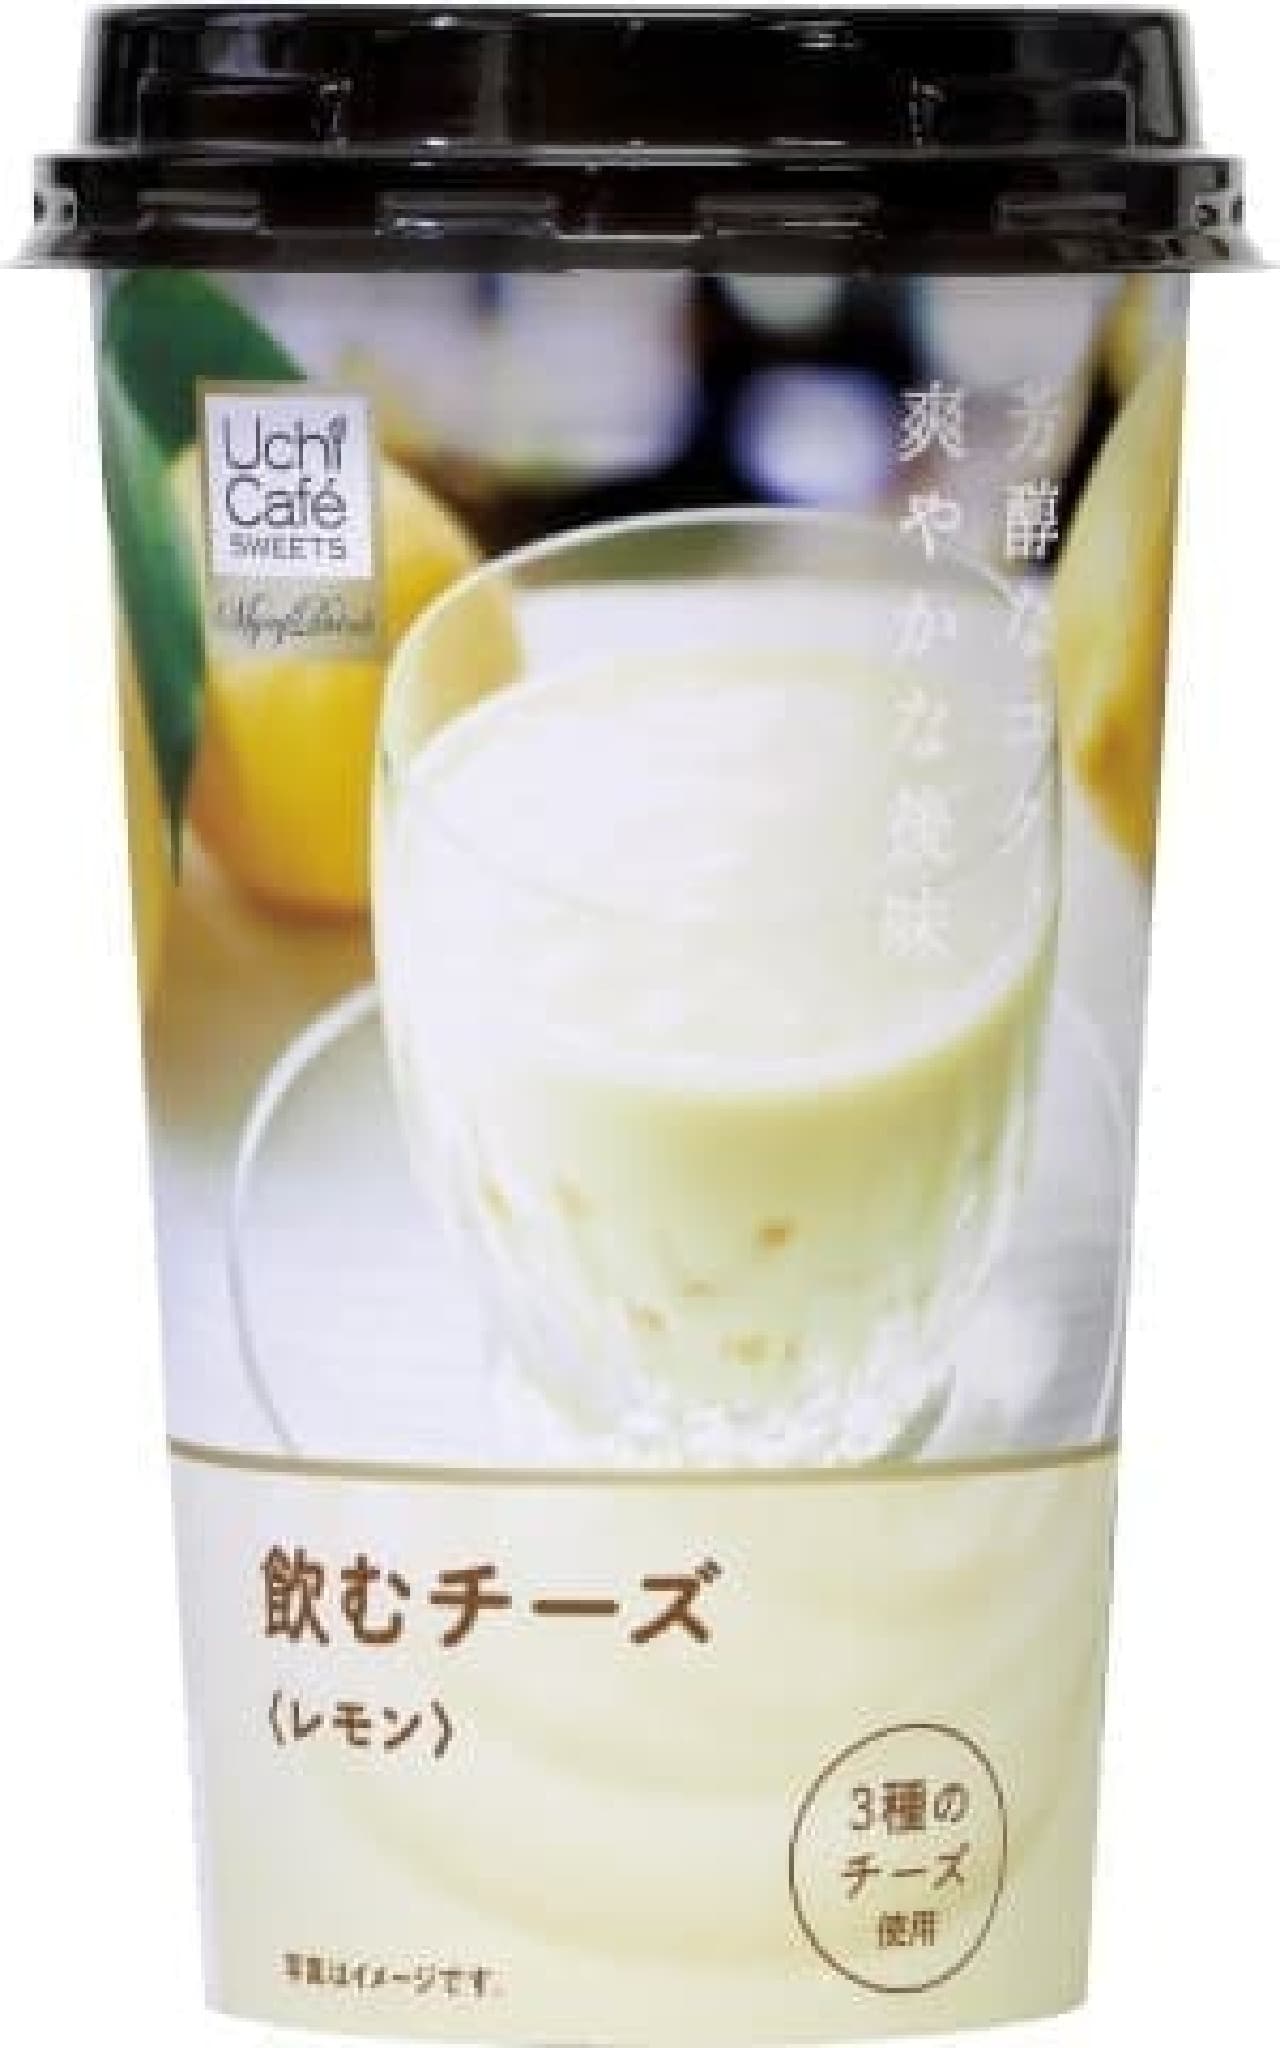 Lawson "Uchi Cafe Drinking Cheese [Lemon] 200g"